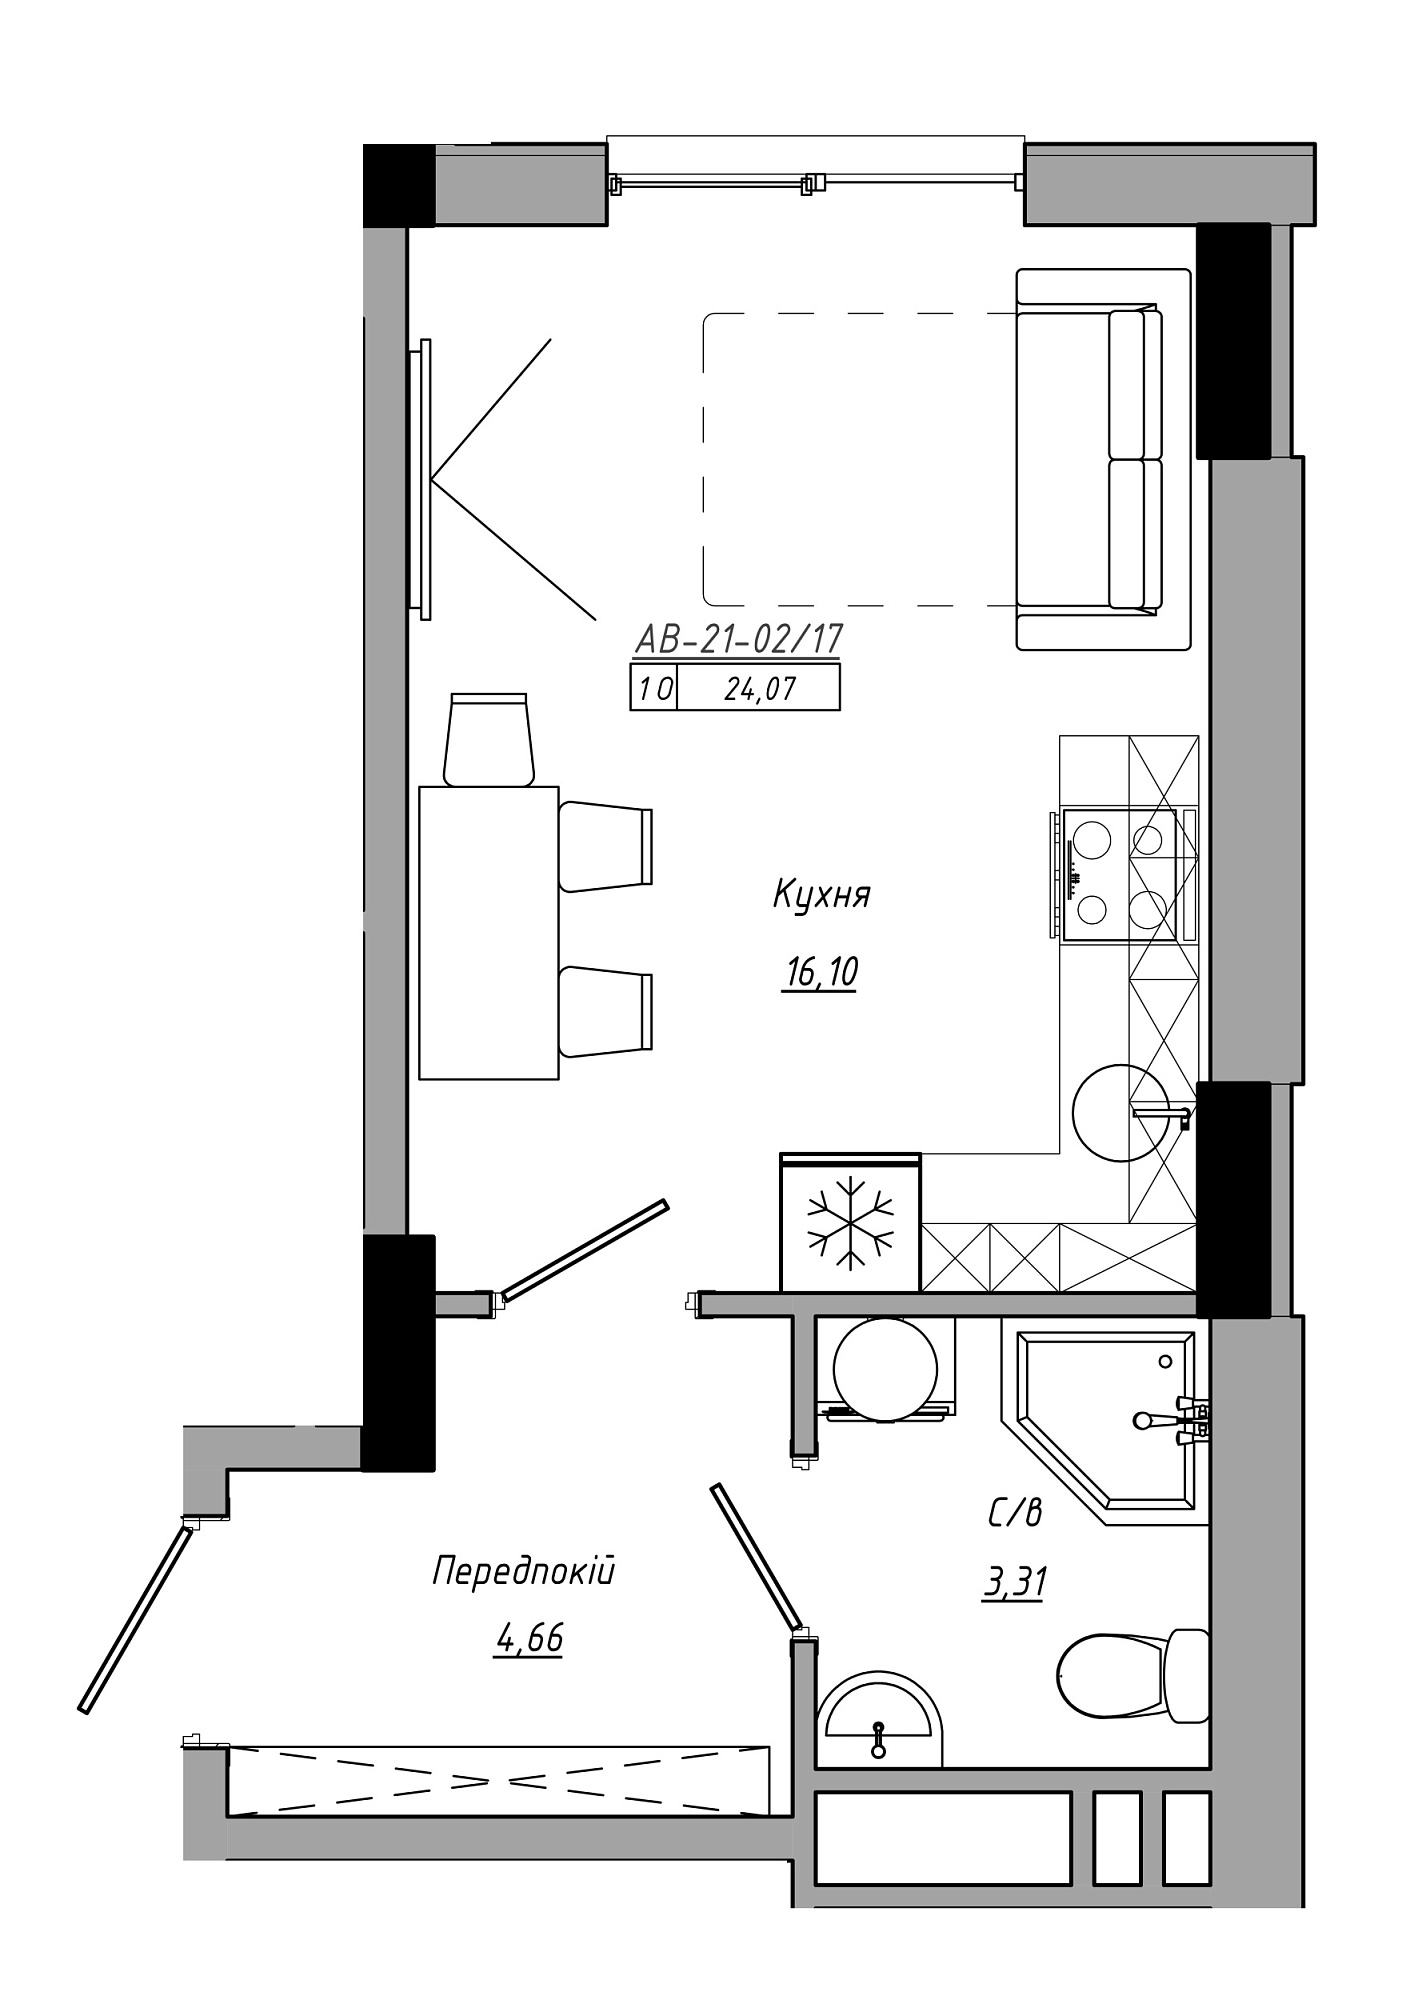 Planning Smart flats area 24.07m2, AB-21-02/00017.